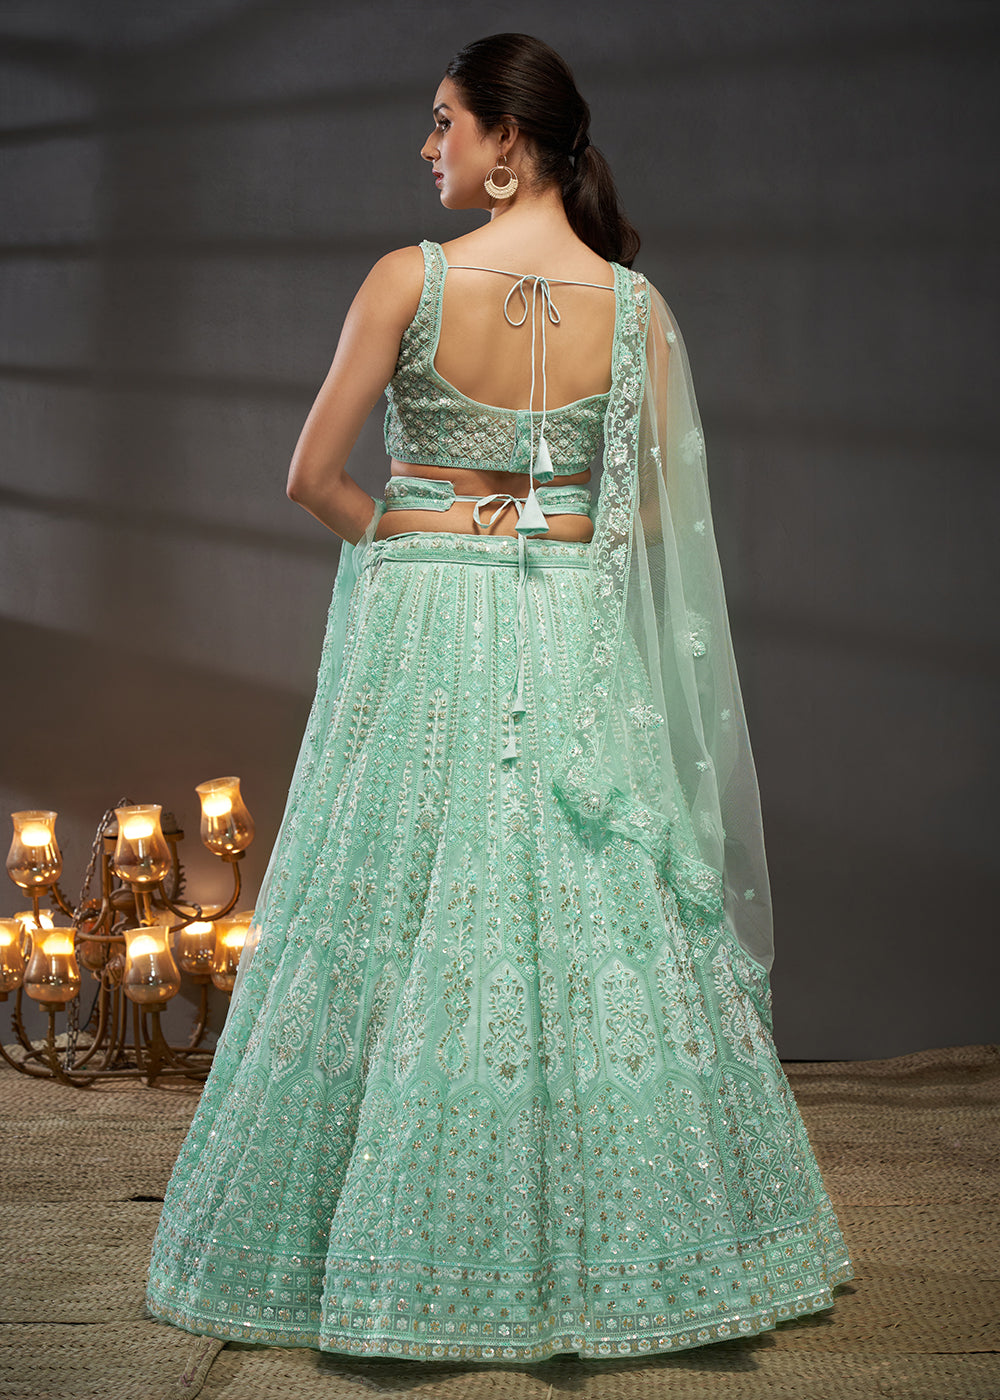 Buy Now Embroidered Heavy Net Turquoise Designer Lehenga Choli Online in USA, UK, Canada & Worldwide at Empress Clothing. 